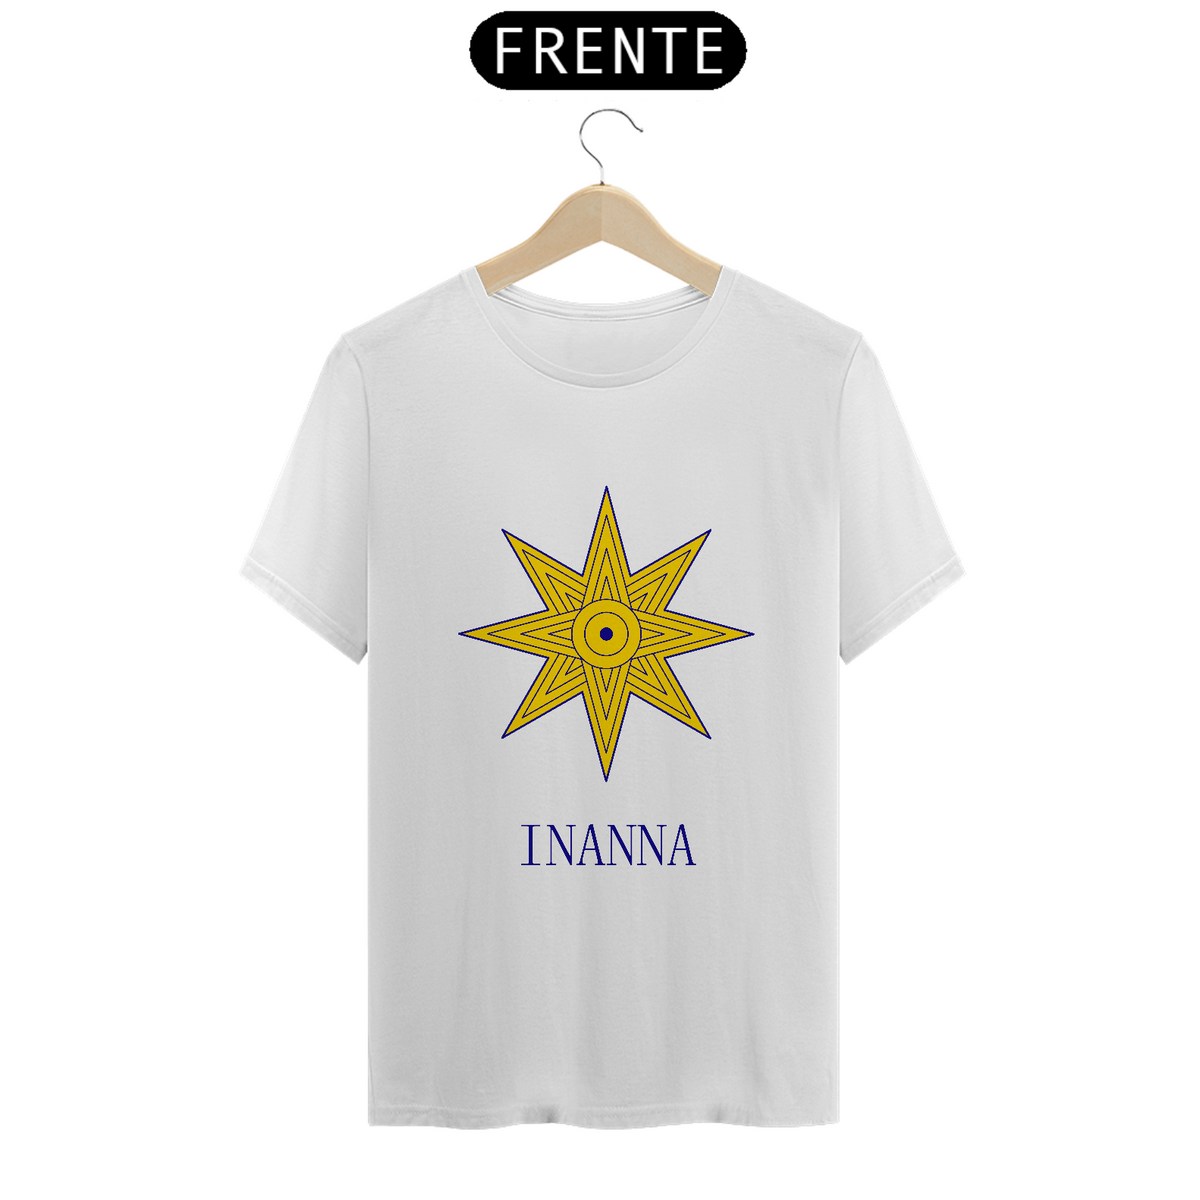 Nome do produto: Camiseta Estrela de Inanna (deusa da Suméria)